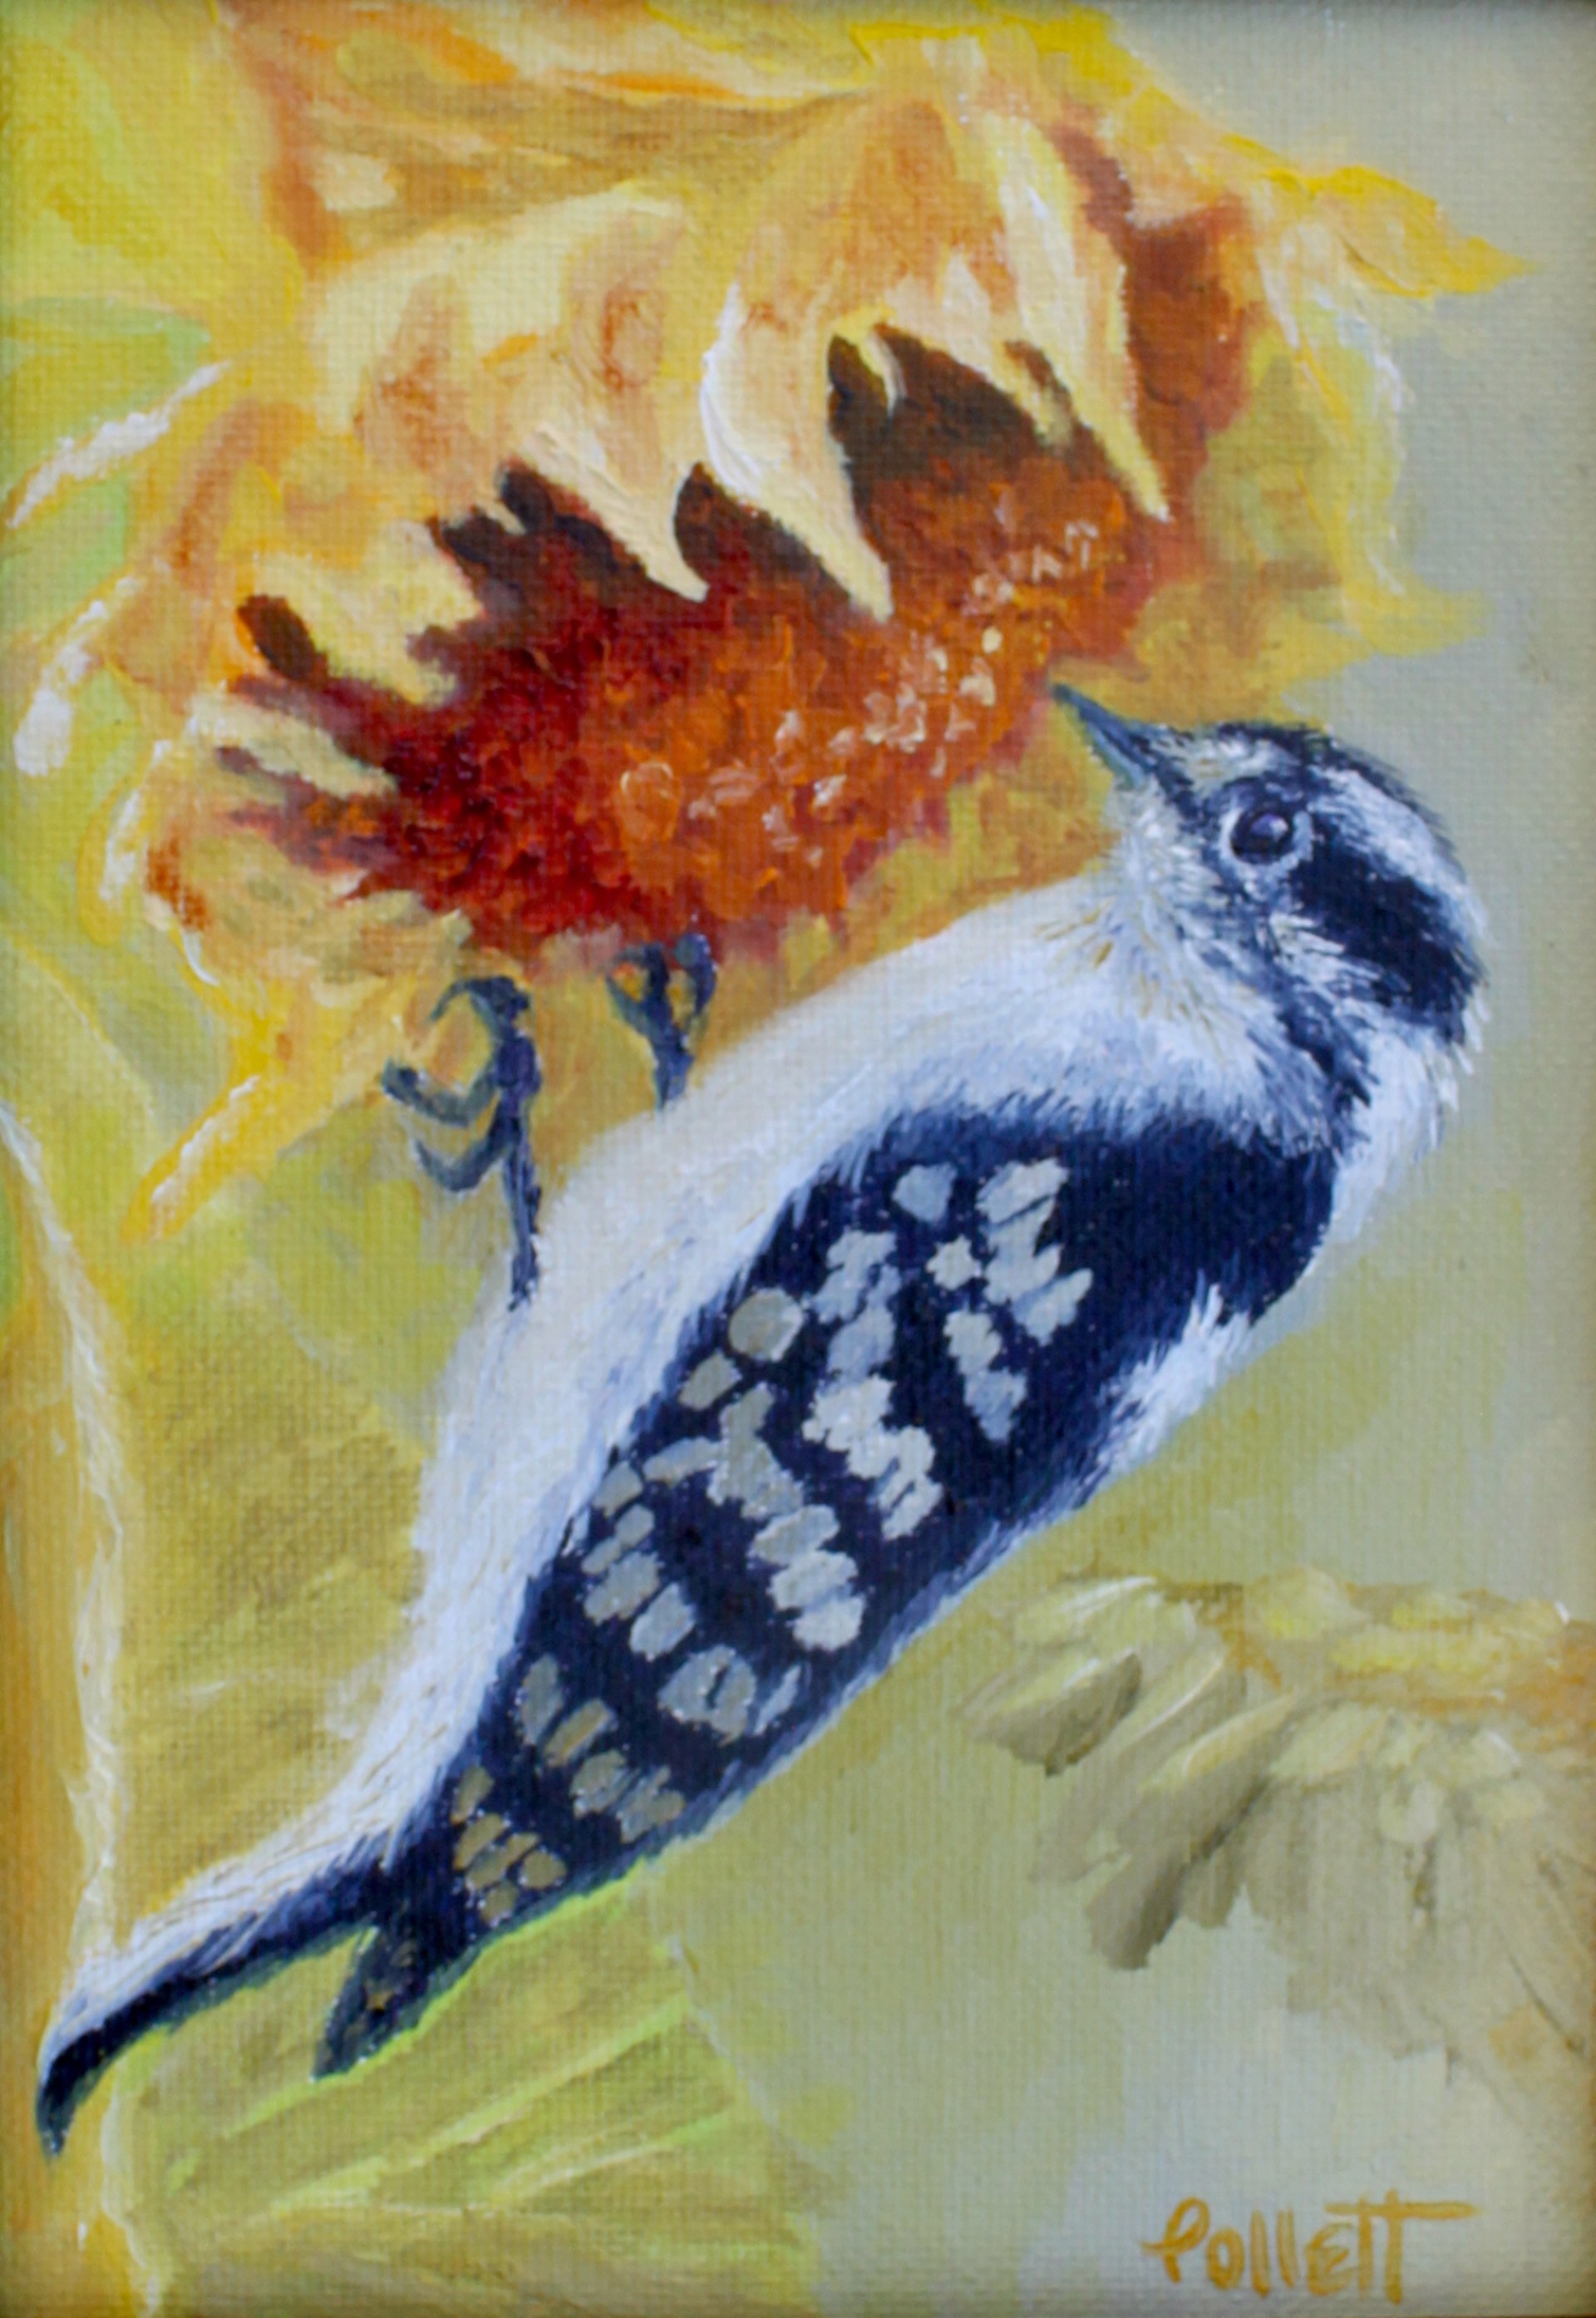 Downy Woodpecker by Cynthia Jewell Pollett